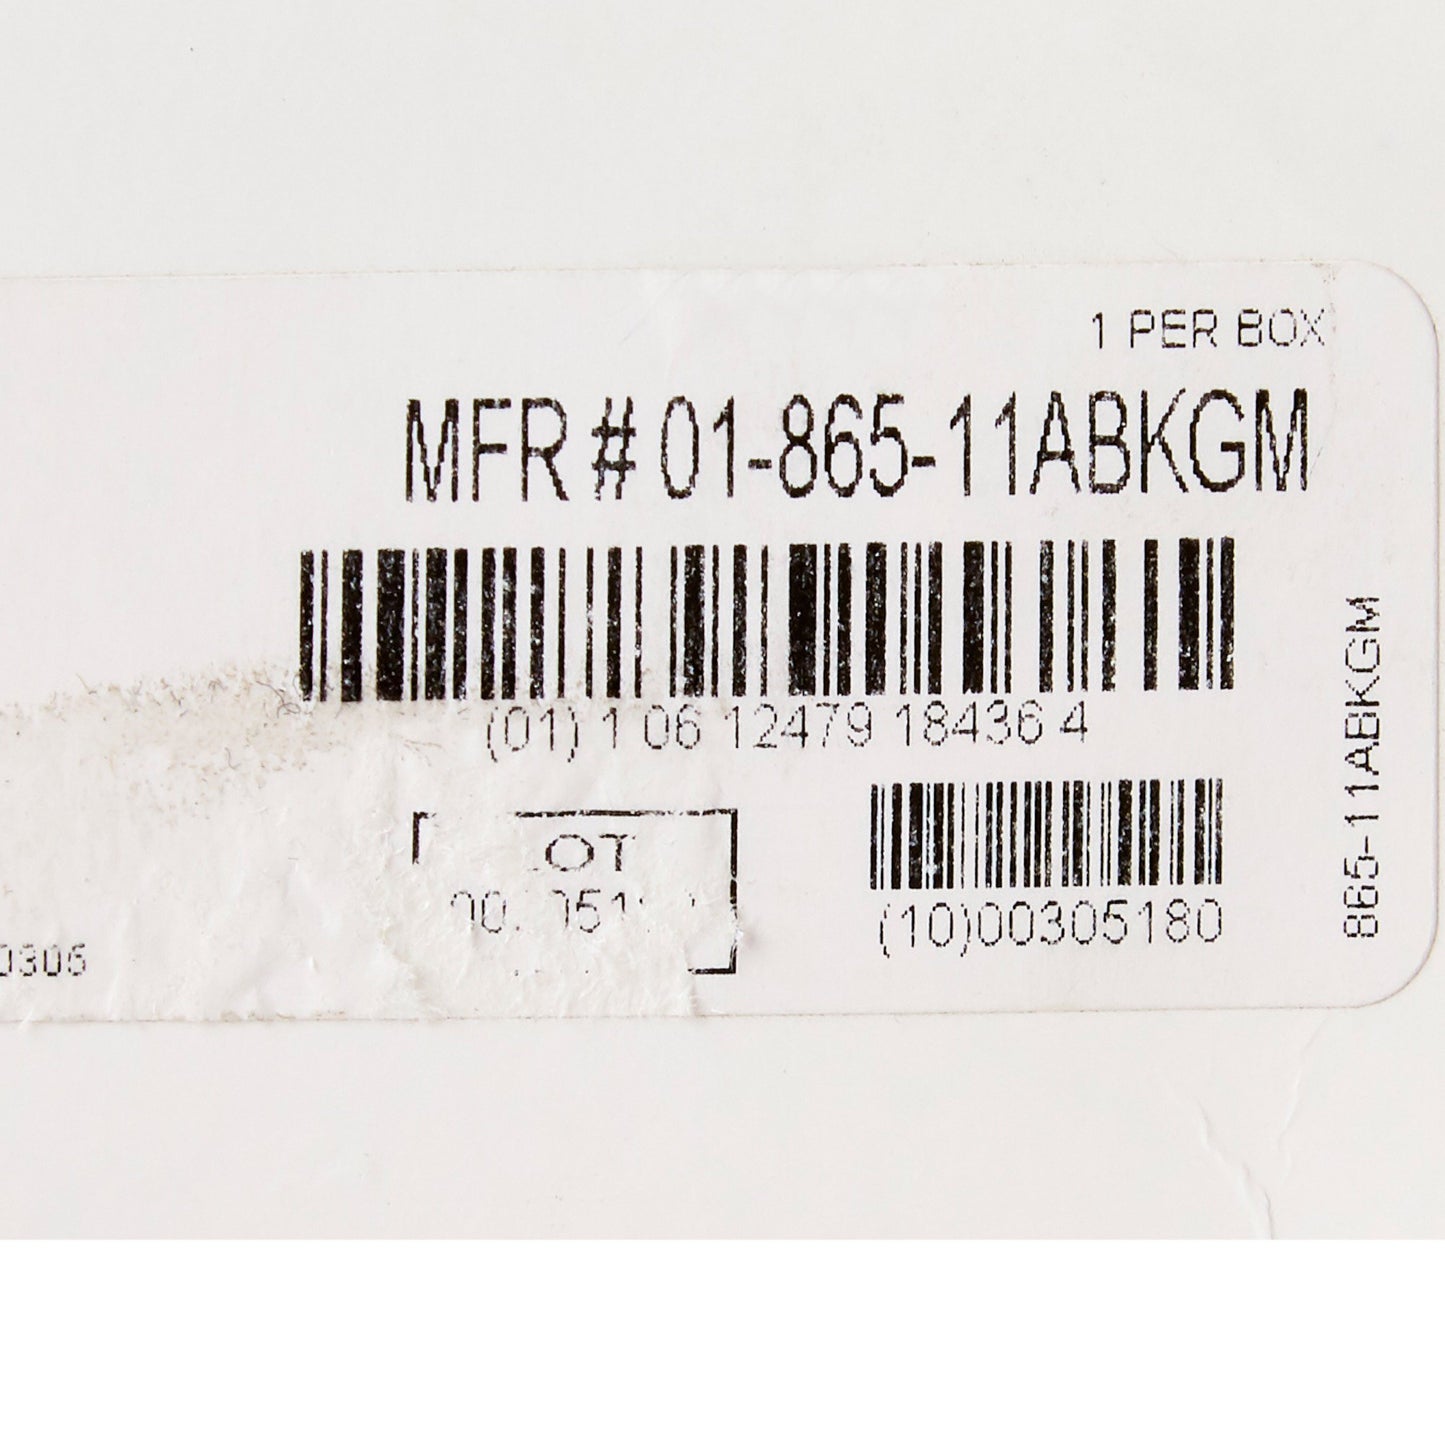 McKesson LUMEON™ Blood Pressure Bulb and Cuff, Nylon, Medium Cuff, Black, 23 - 40 cm, Arm, Adult